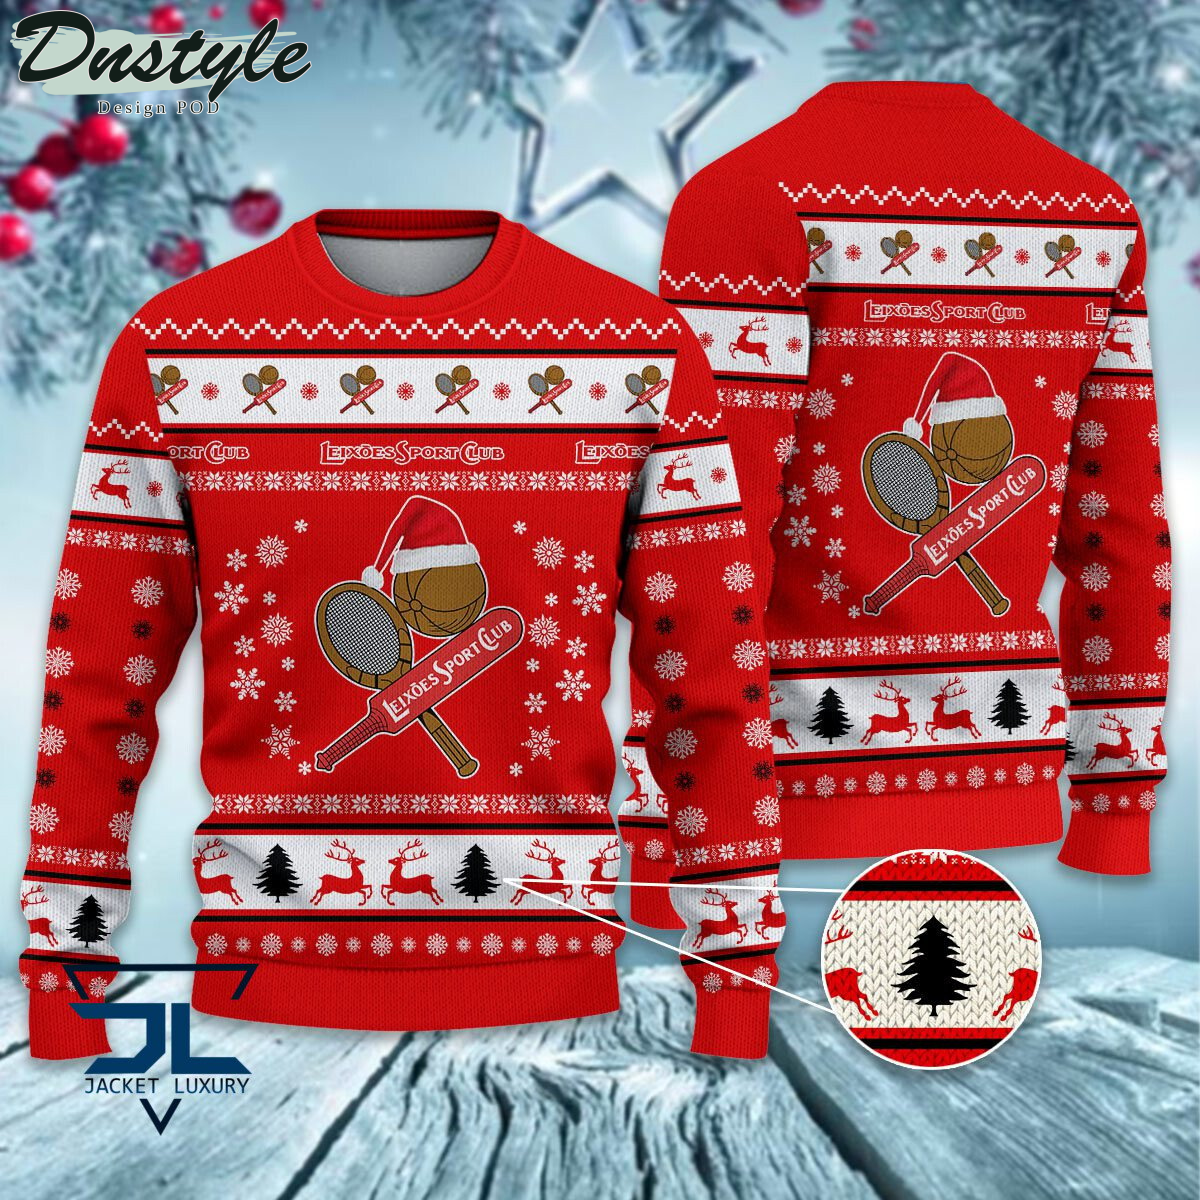 Leixões S.C ugly christmas sweater